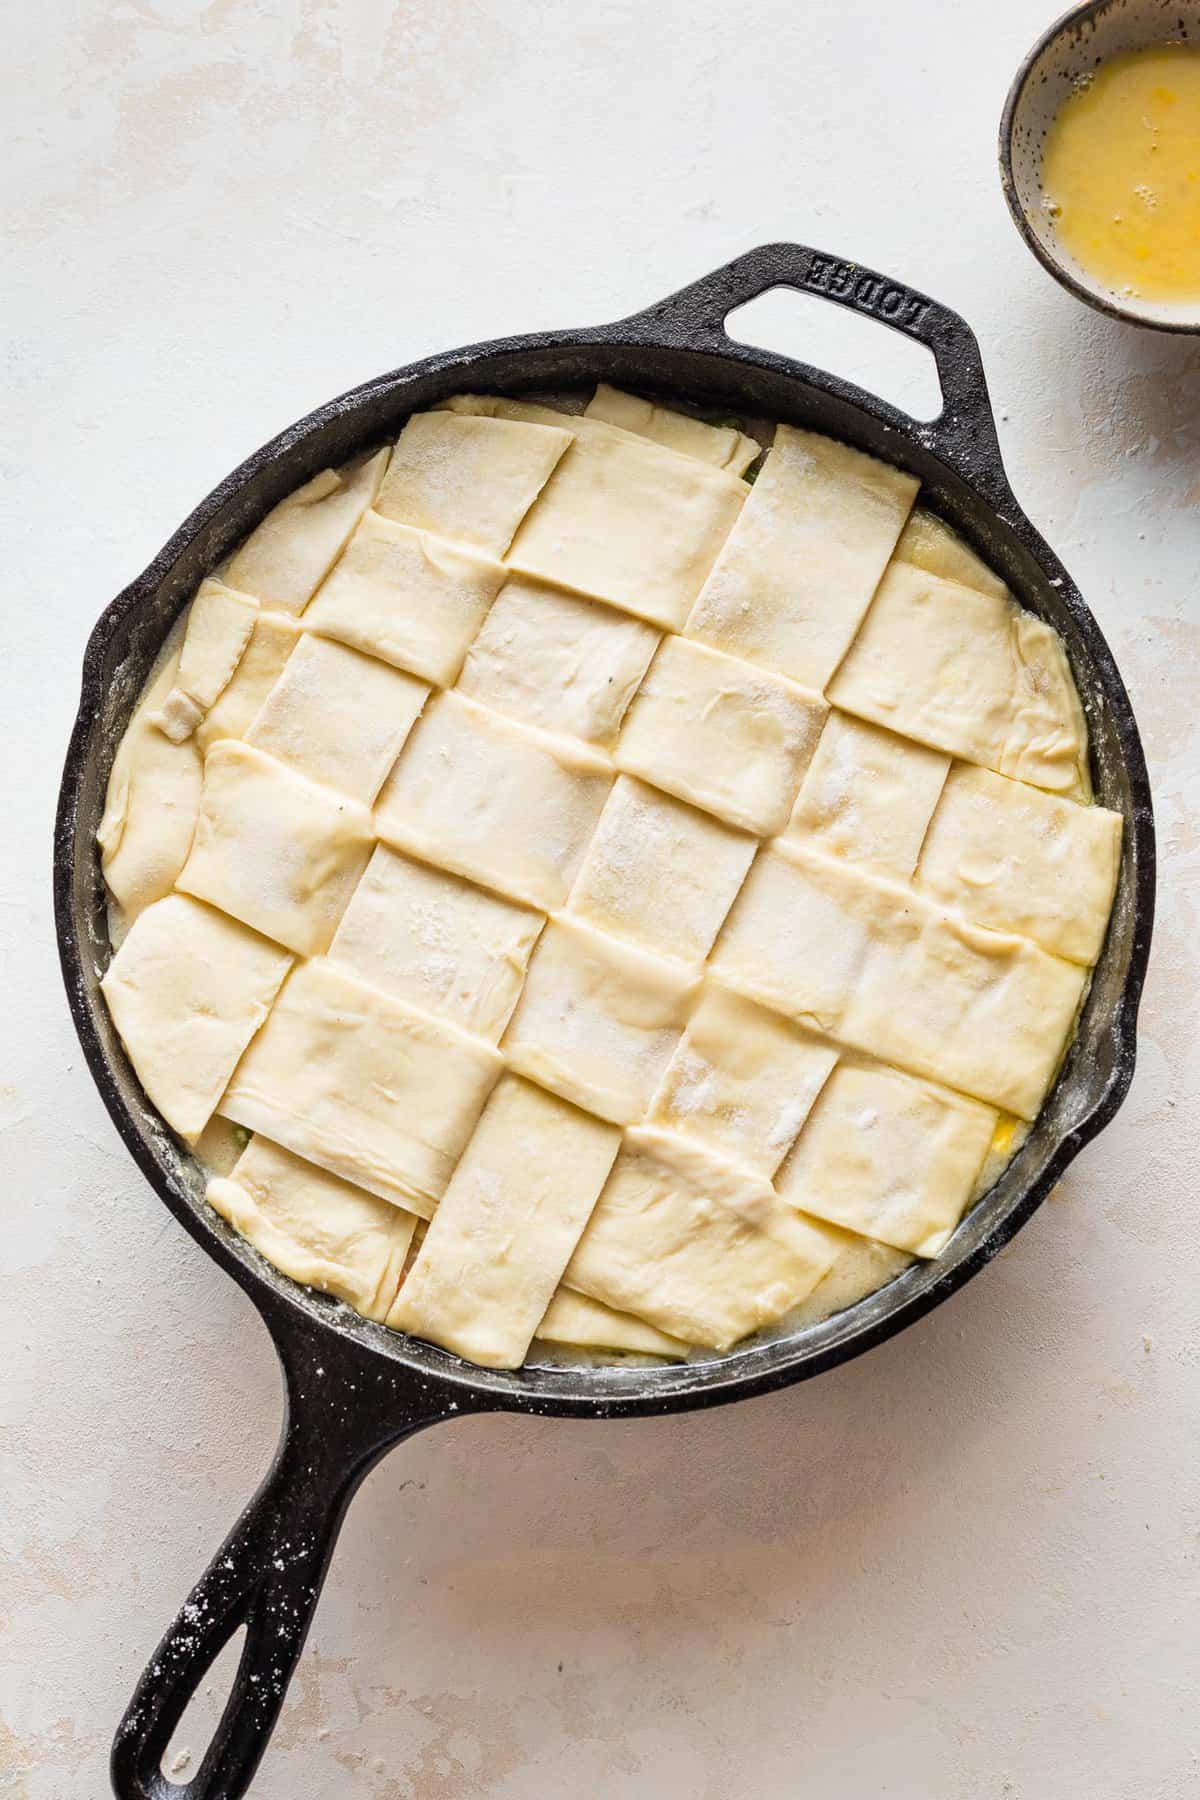 Lattice pastry crust over turkey pot pie filling in a cast iron skillet.